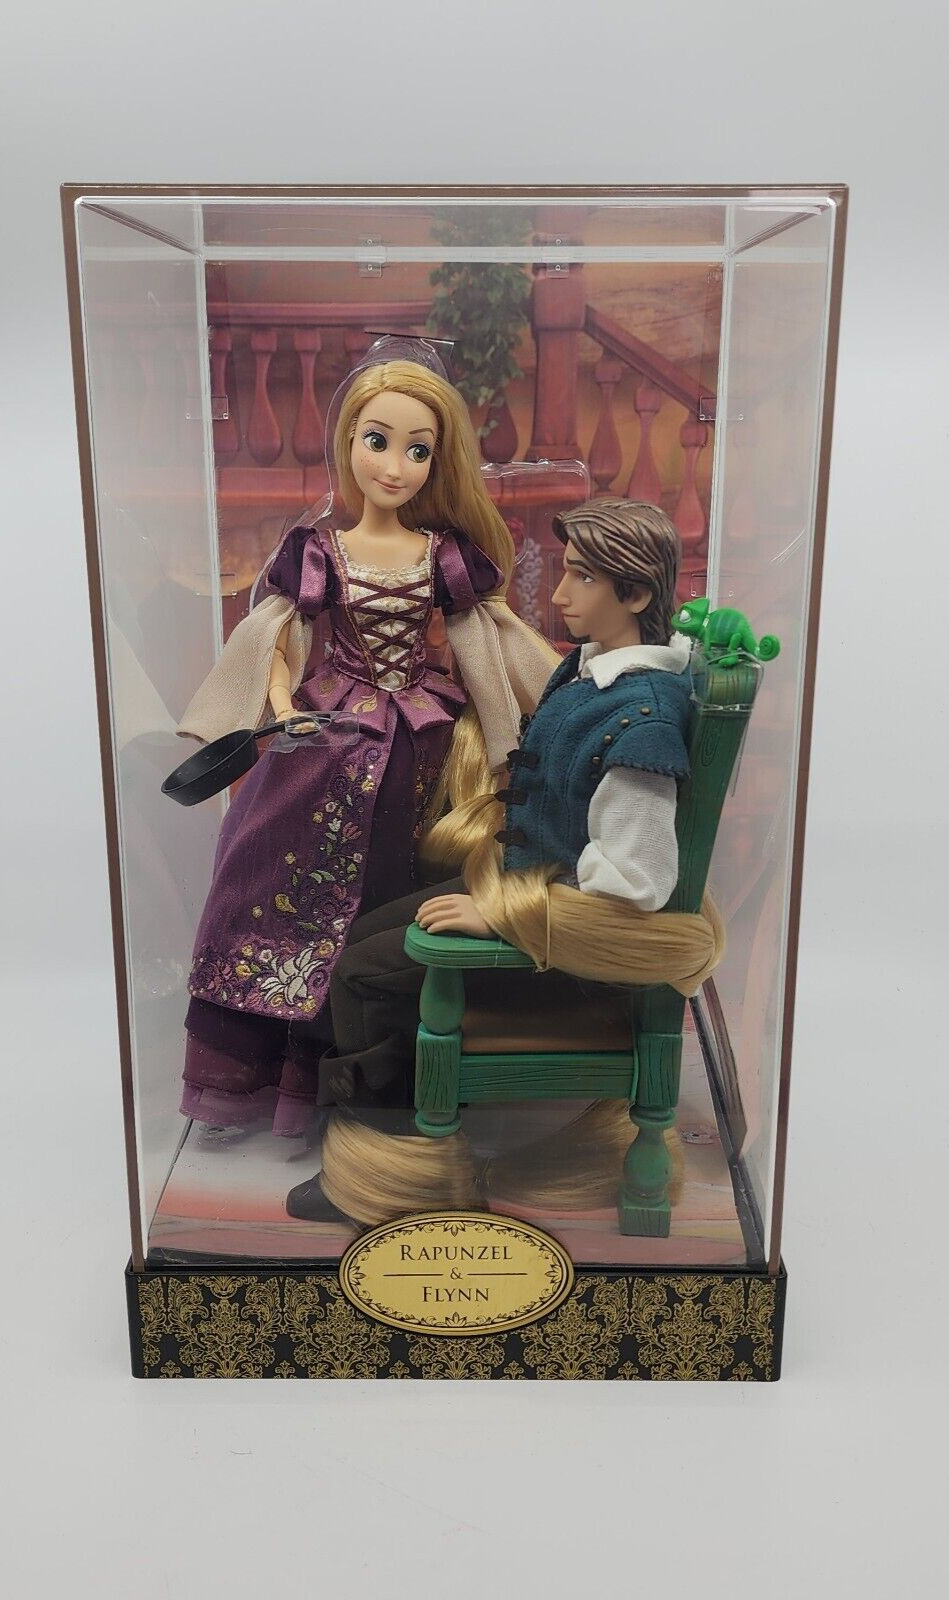 Disney Rapunzel And Flynn 12” fairytale designer limited edition 4195/6000